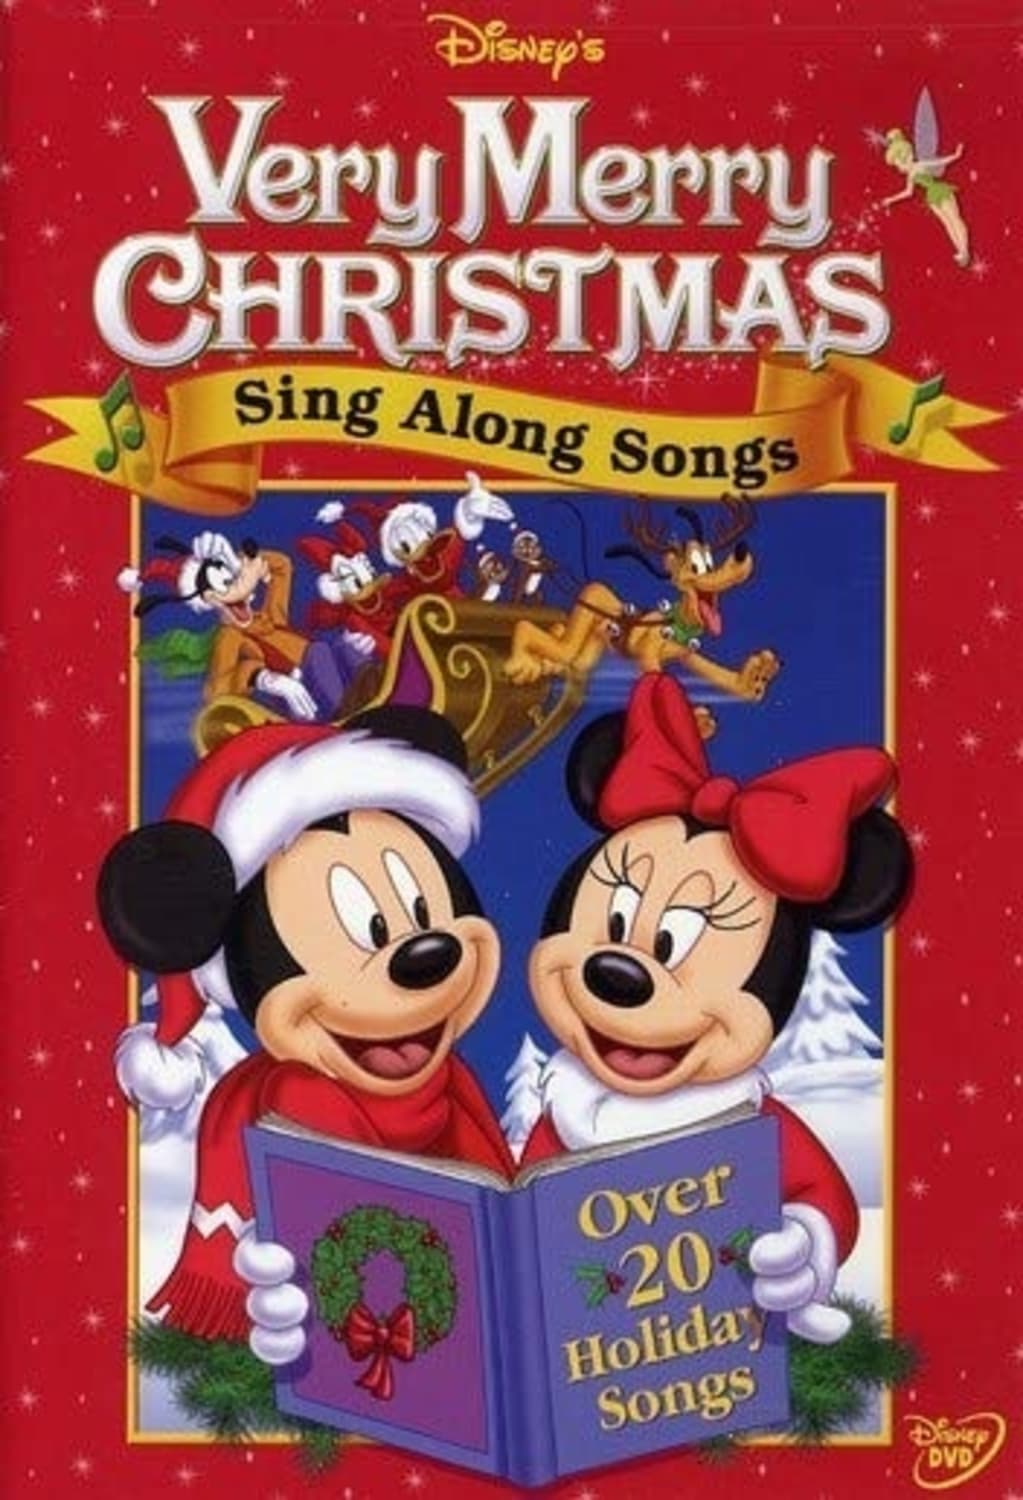 Disney’s Sing Along Songs – Very Merry Christmas Songs (DVD) on MovieShack